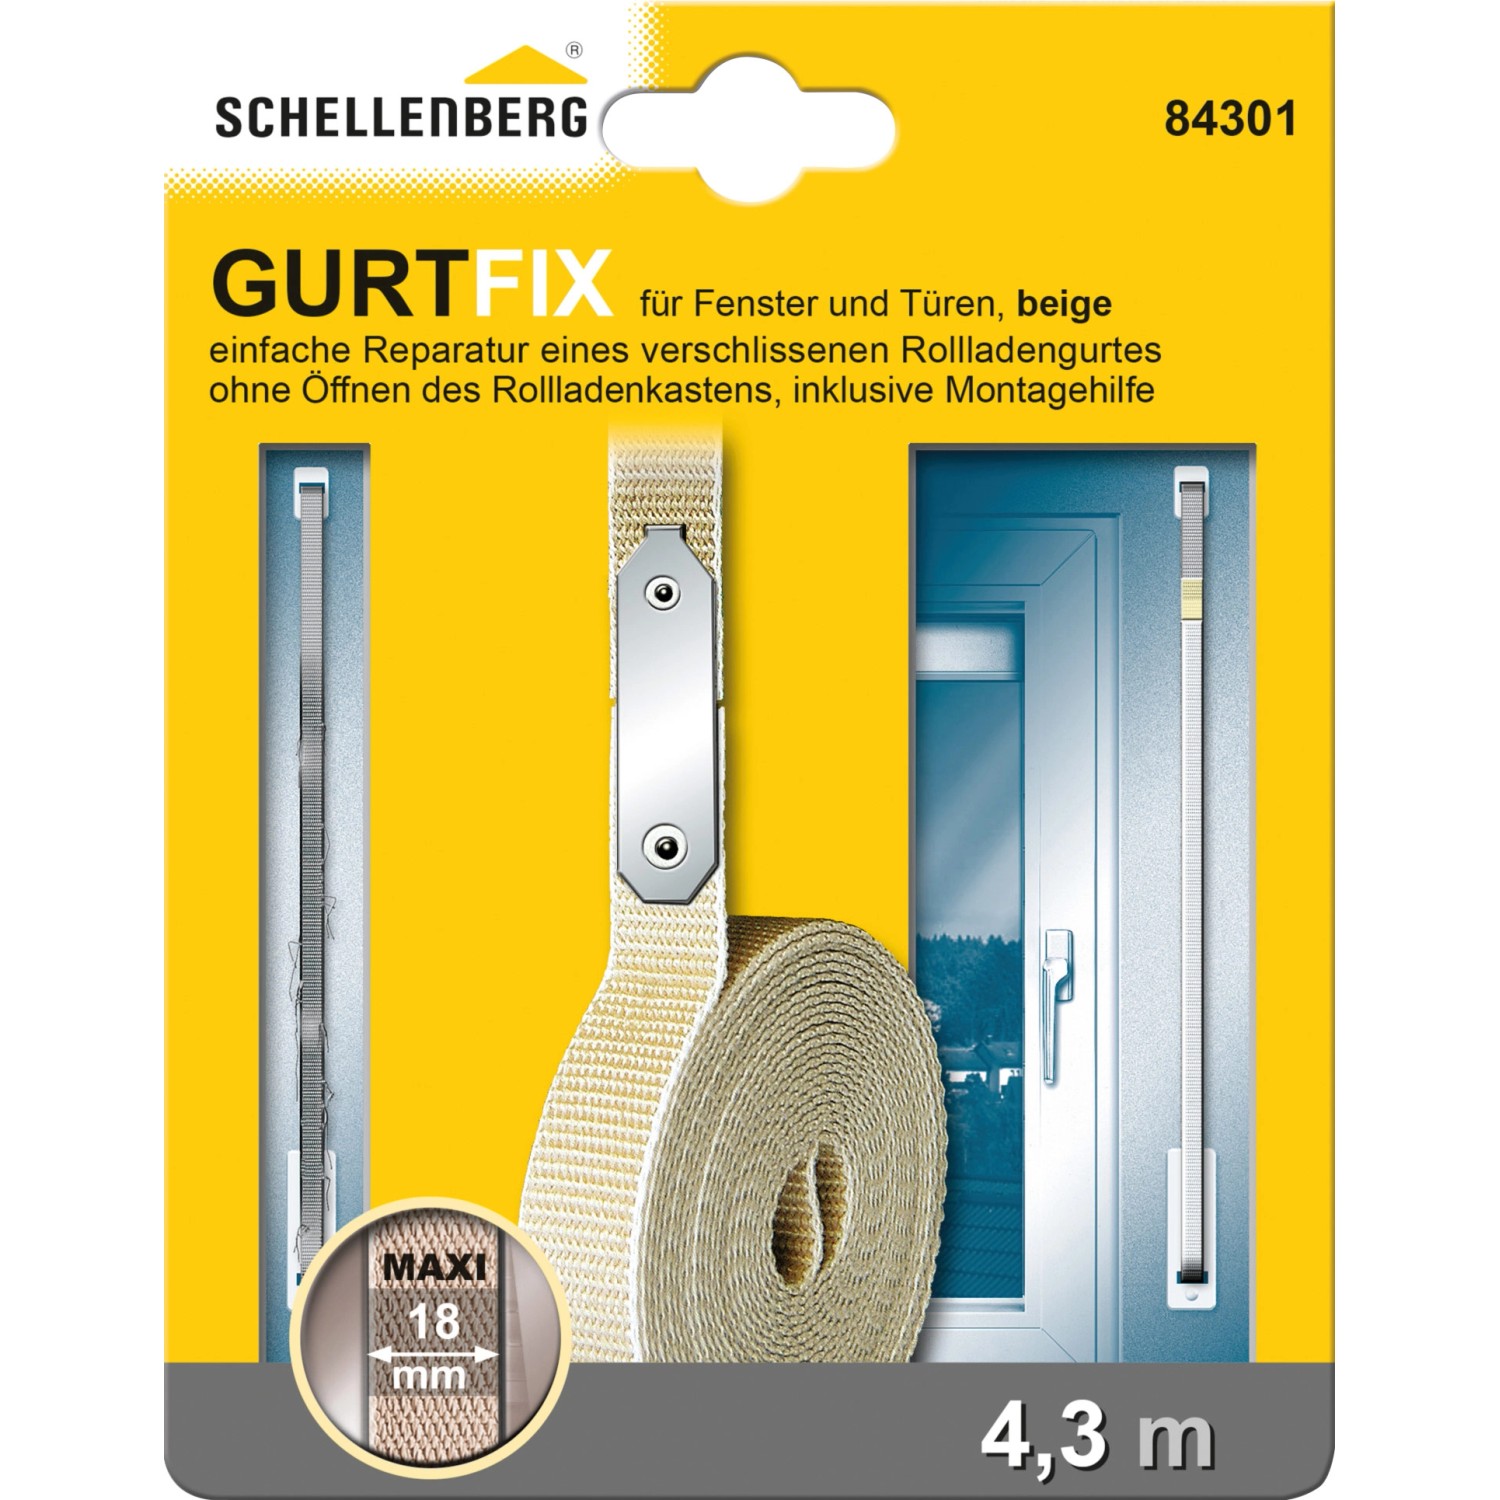 Beige Maxi 18 Schellenberg Reparaturset mm Gurtfix